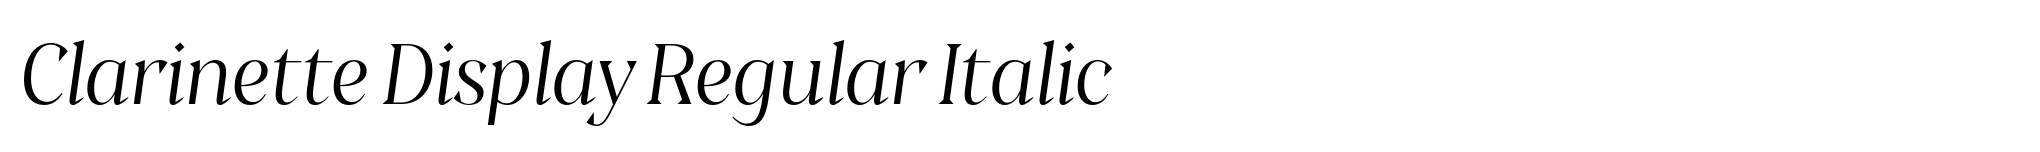 Clarinette Display Regular Italic image